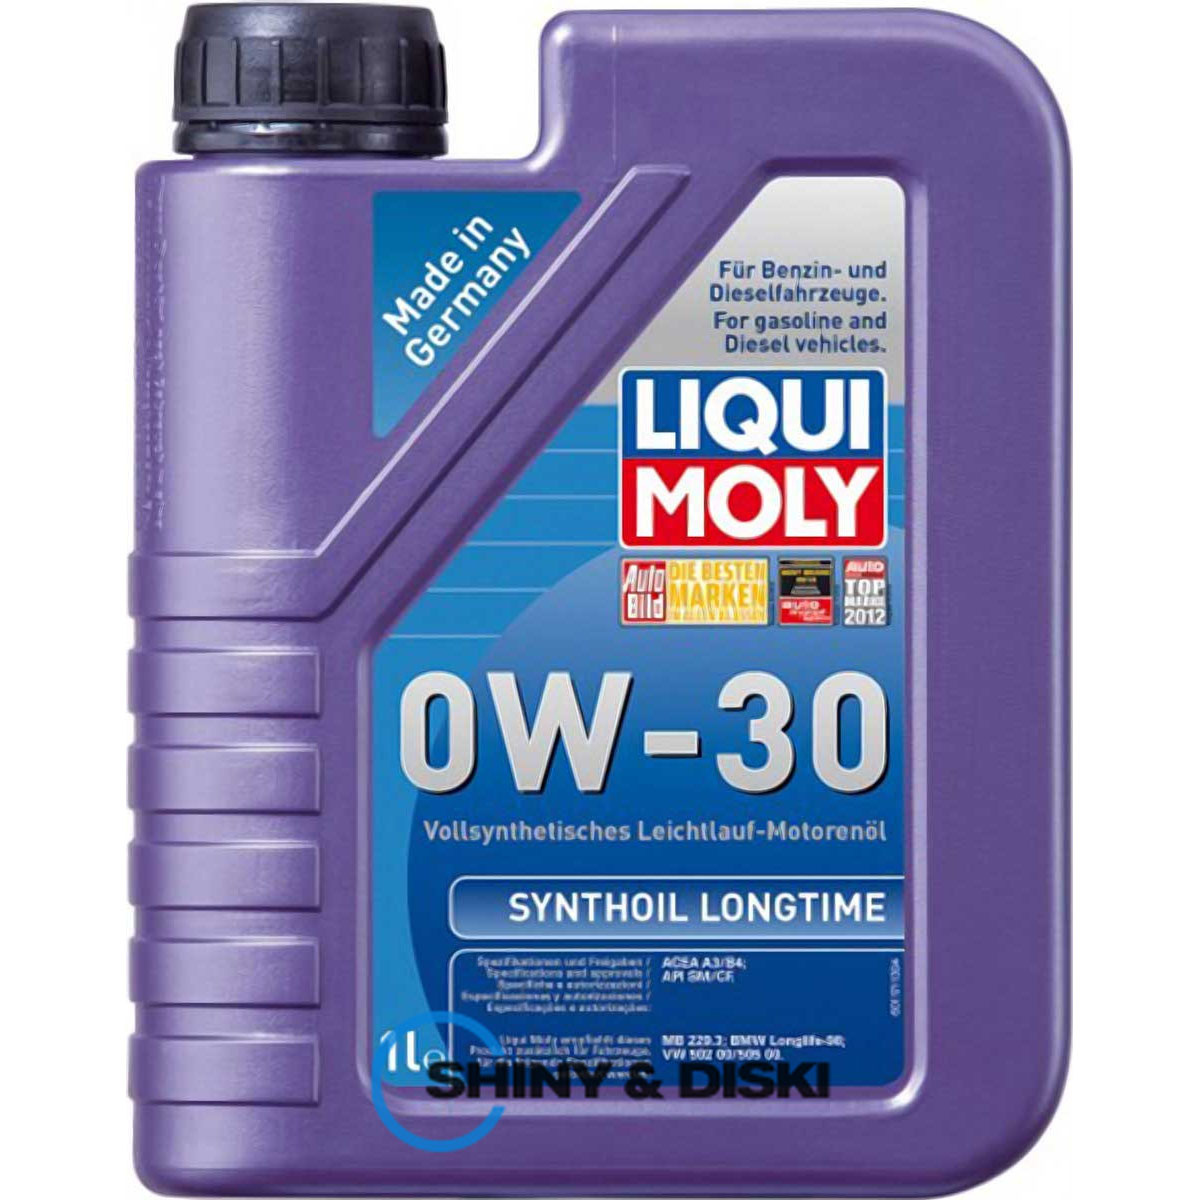 liqui moly synthoil longtime 0w-30 (1л)